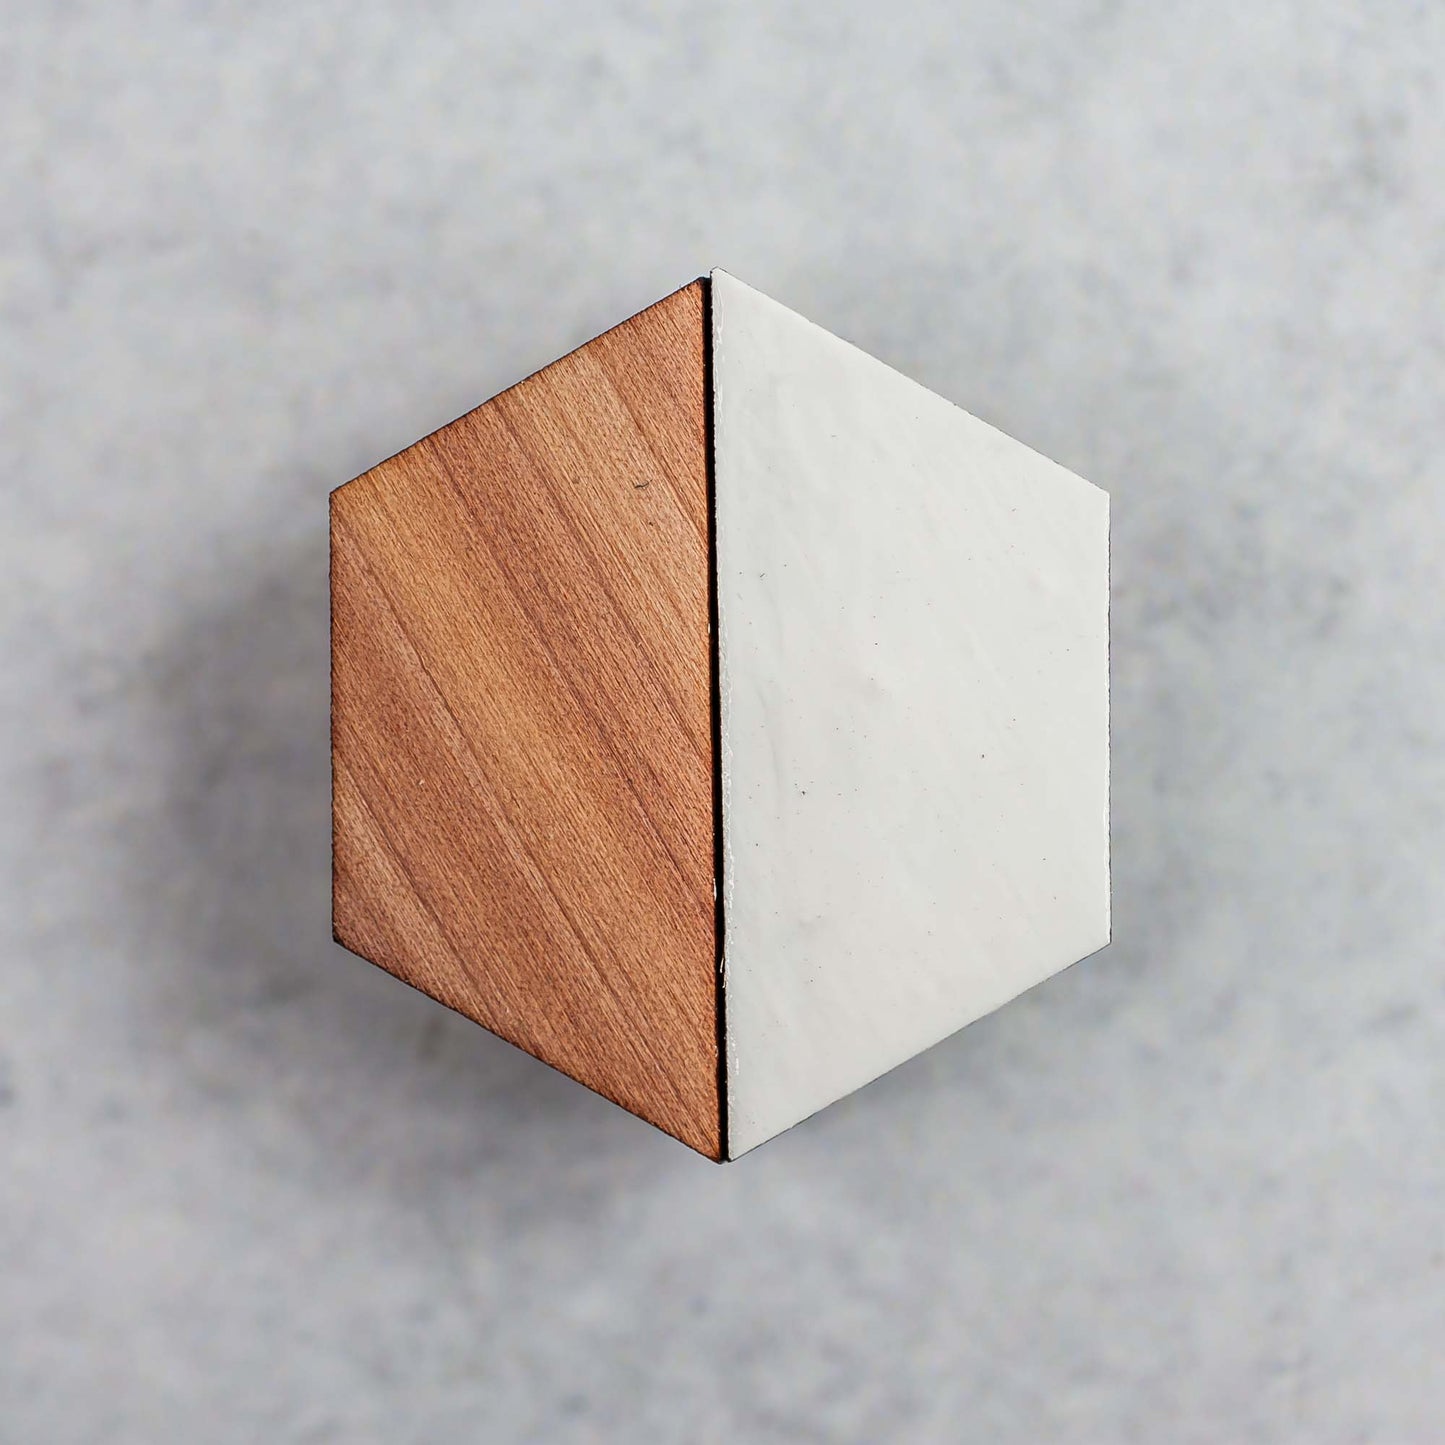 Decorative Refrigerator Magnets - Hexagonal cedar wood, hand painted by LeeMo Designs in Bend, Oregon